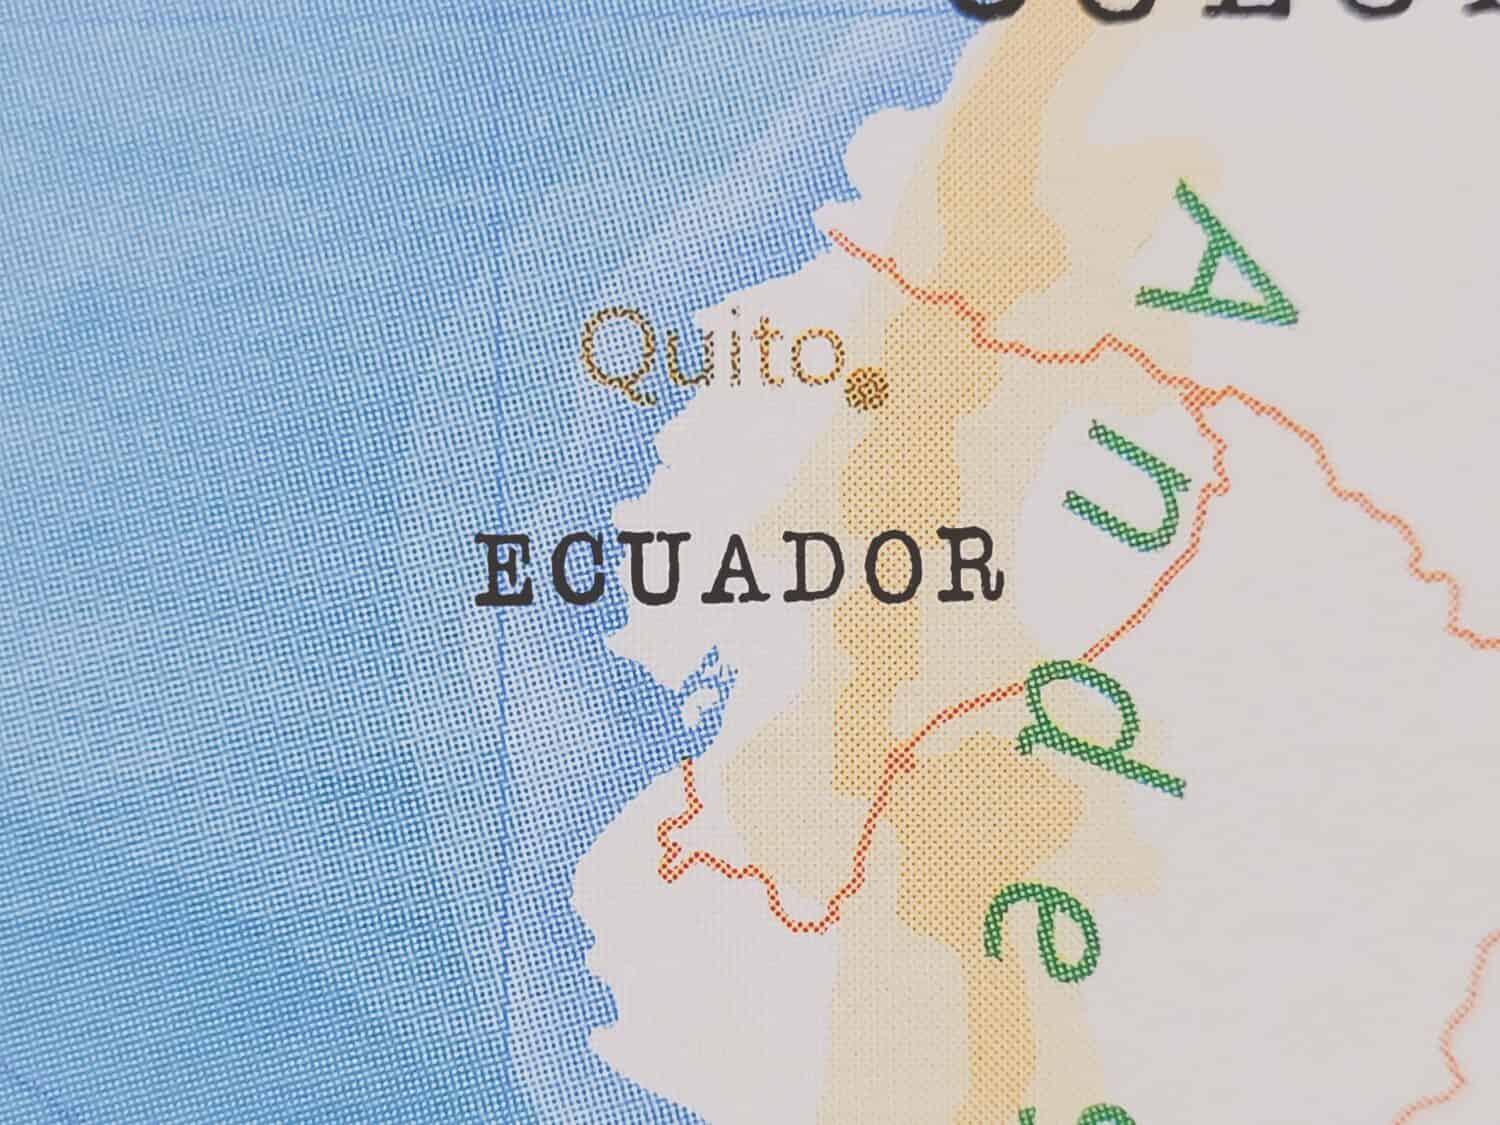 Ecuador in the Realistic World Map